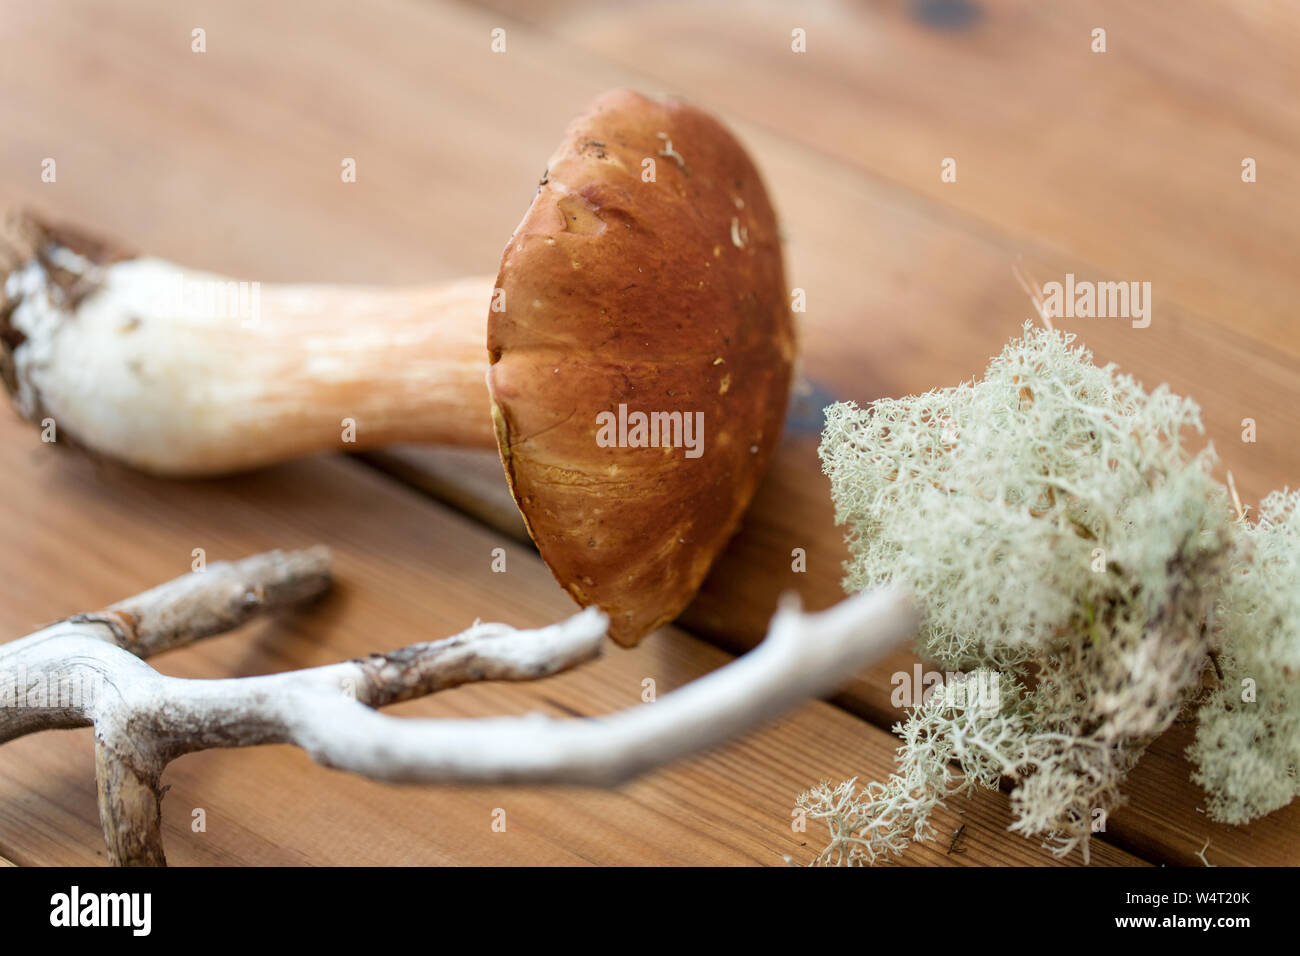 boletus mushrooms, moss, branch and bark on wood Stock Photo